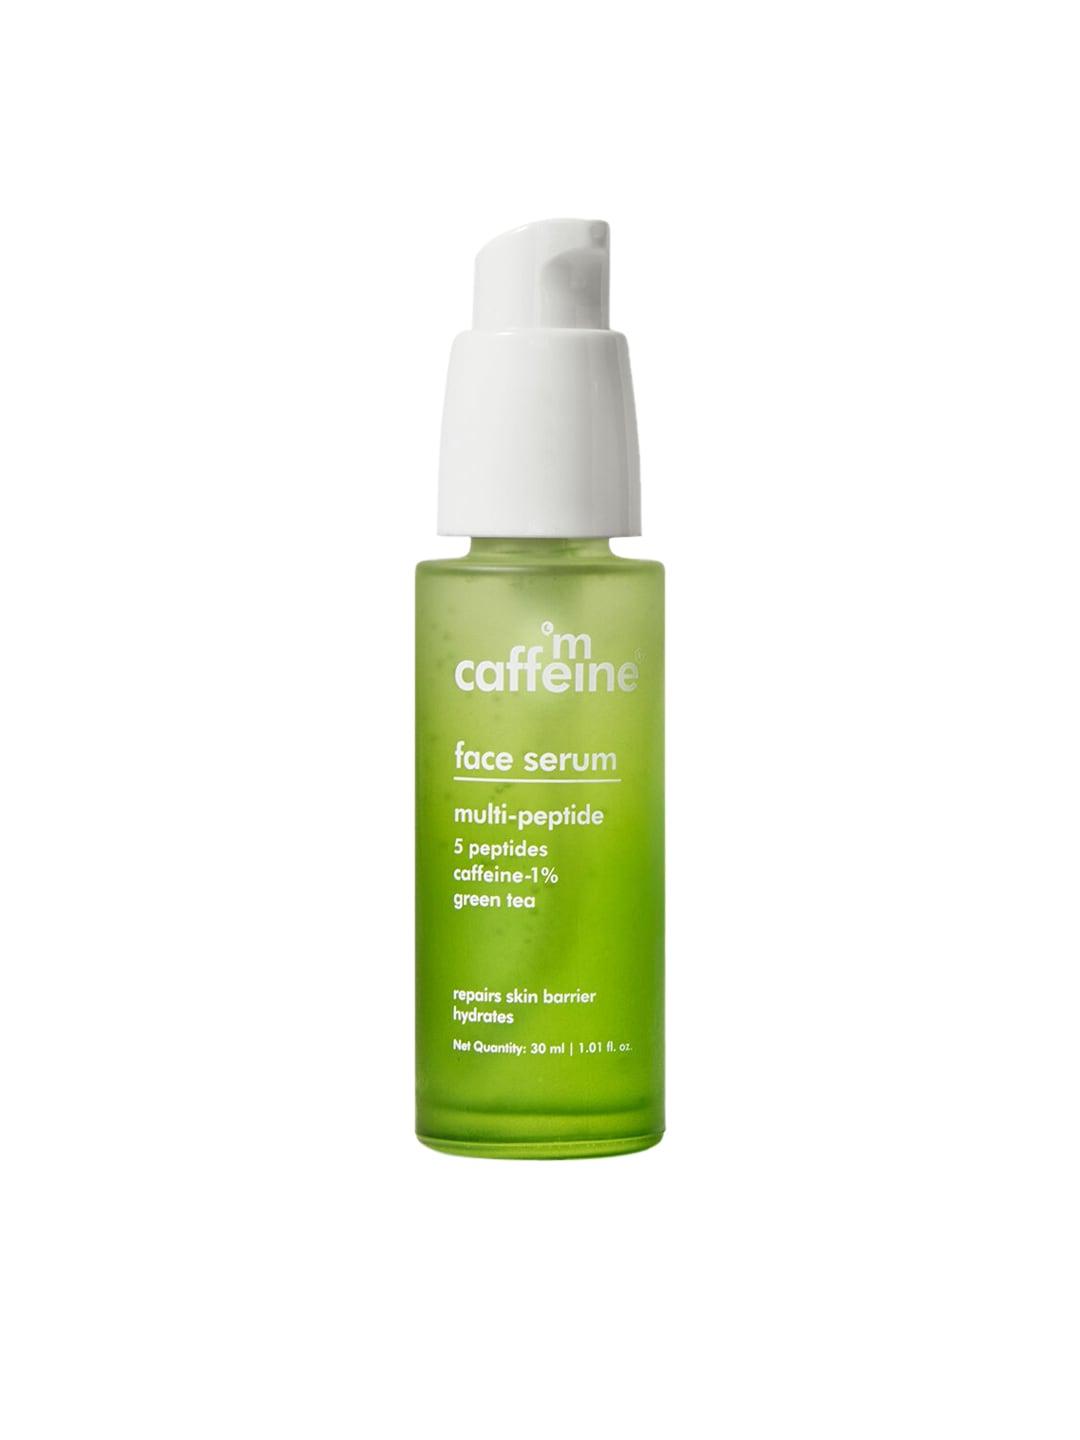 mcaffeine green tea face serum with multi-peptides 30 ml